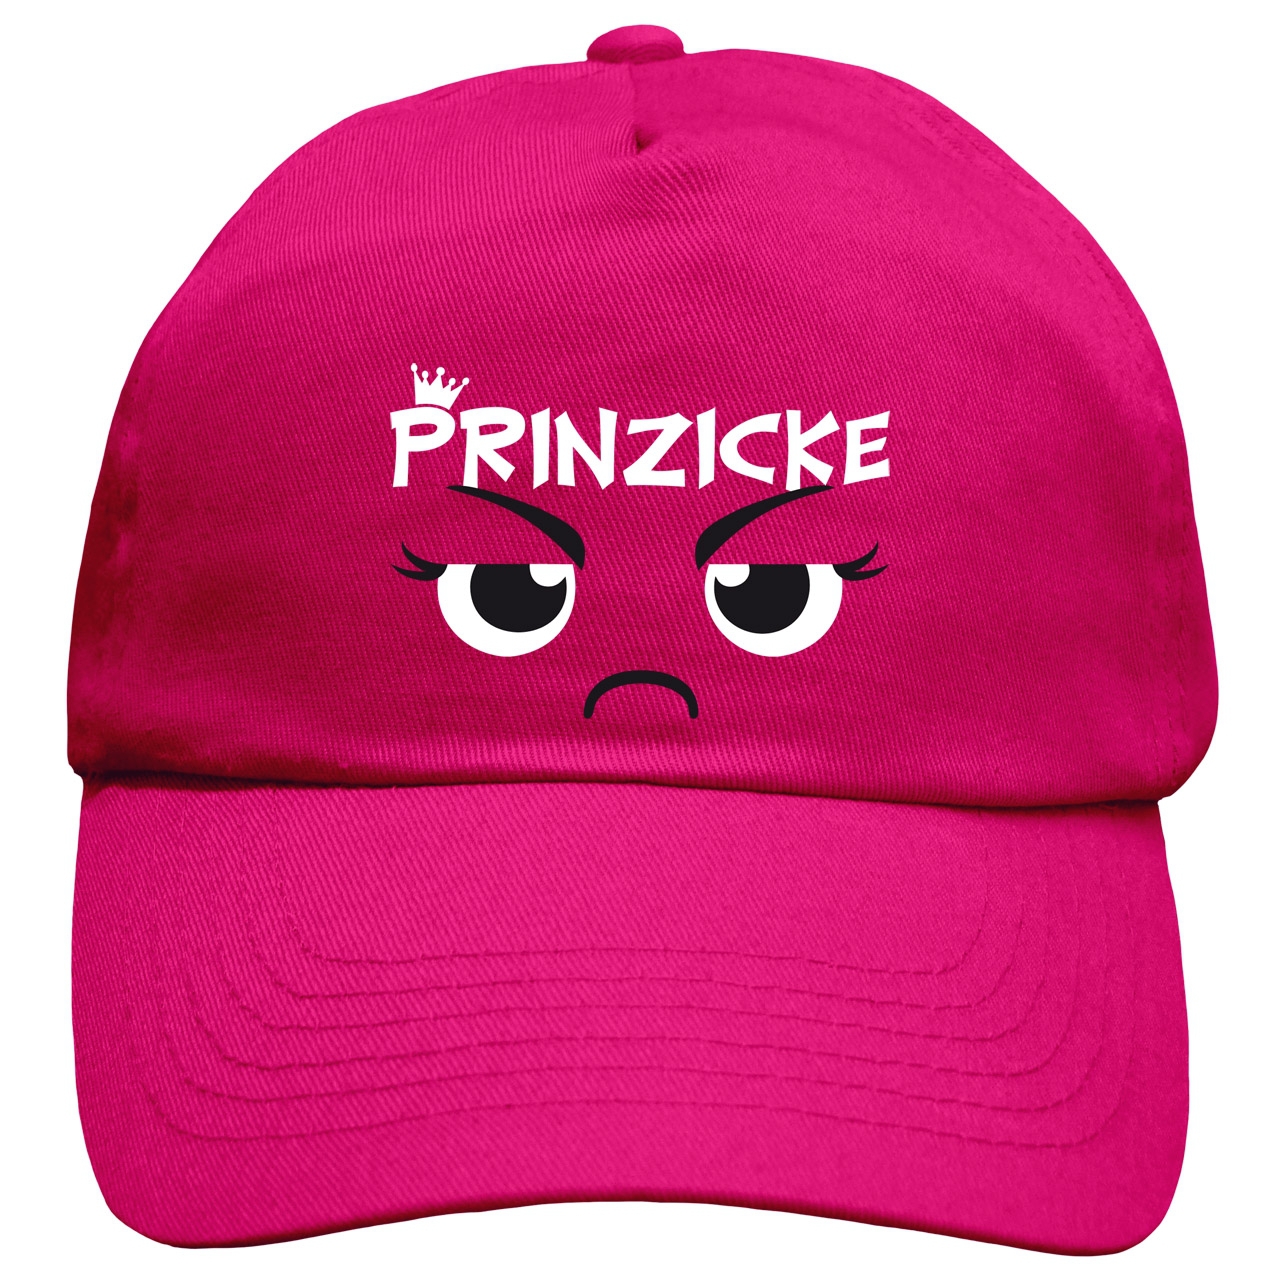 Prinzicke Cap Kinder pink